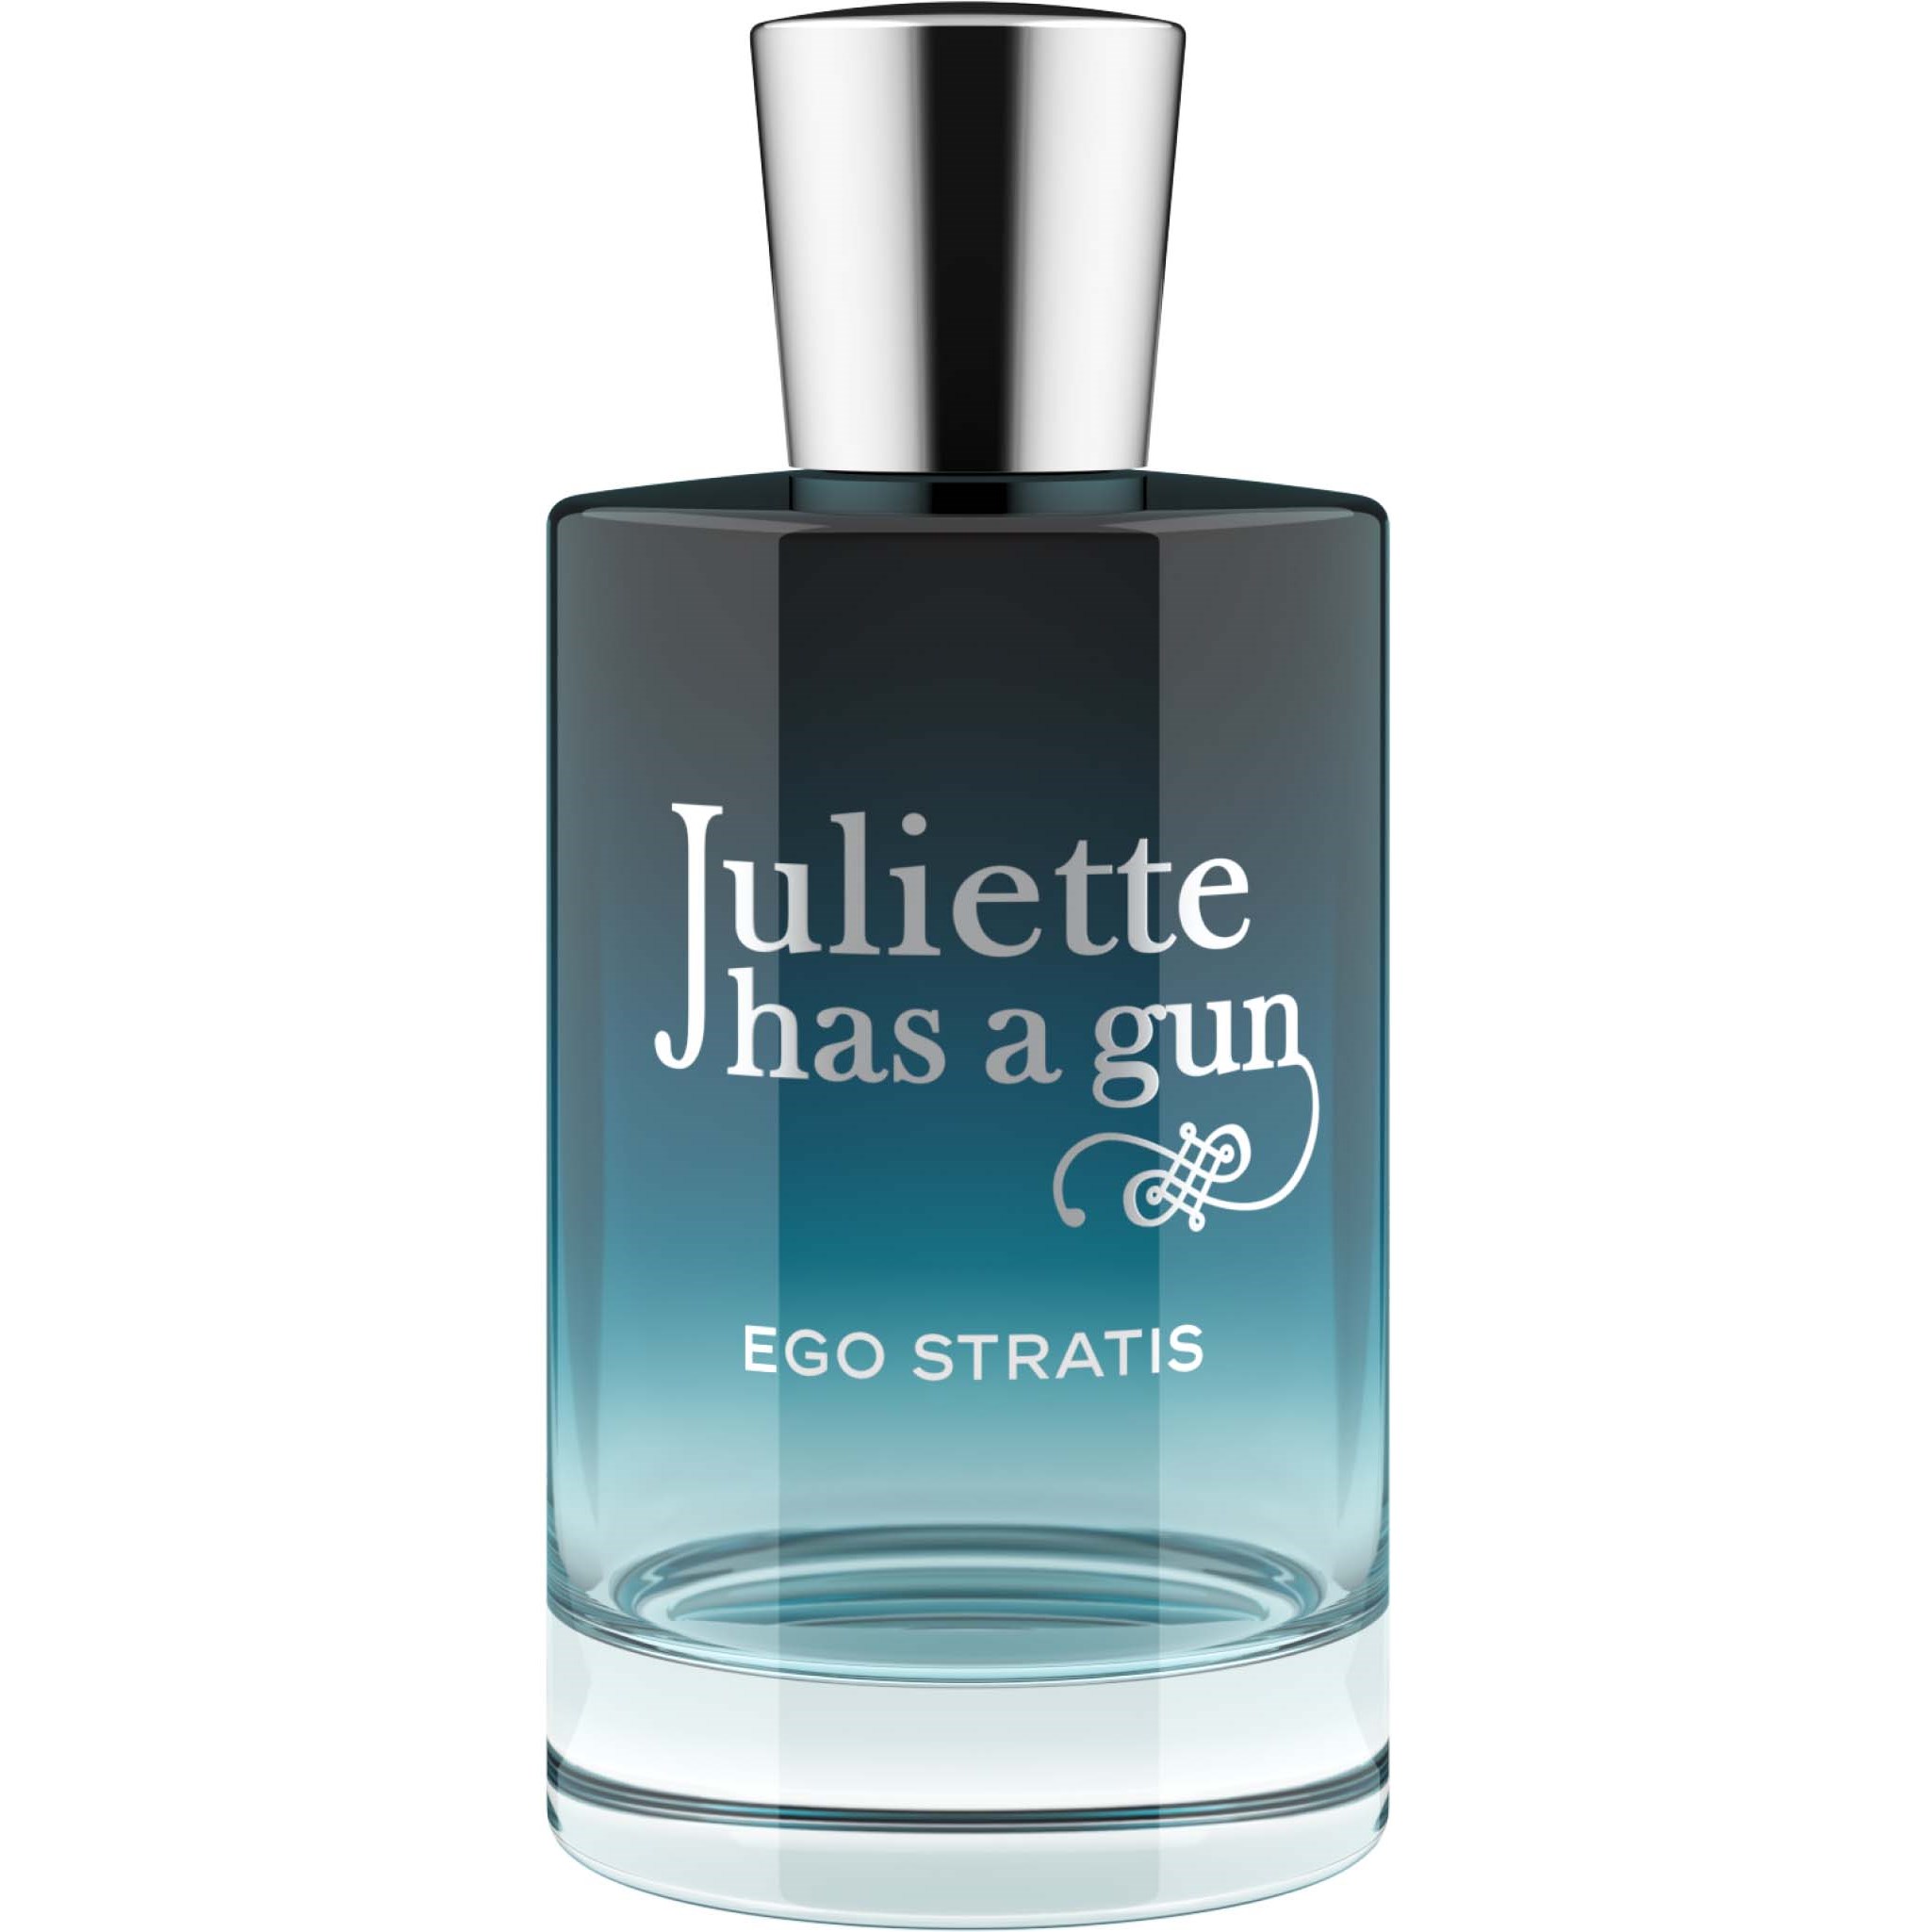 Zdjęcia - Perfuma damska Juliette Has a Gun Eau de Parfum Ego Stratis 100 ml 